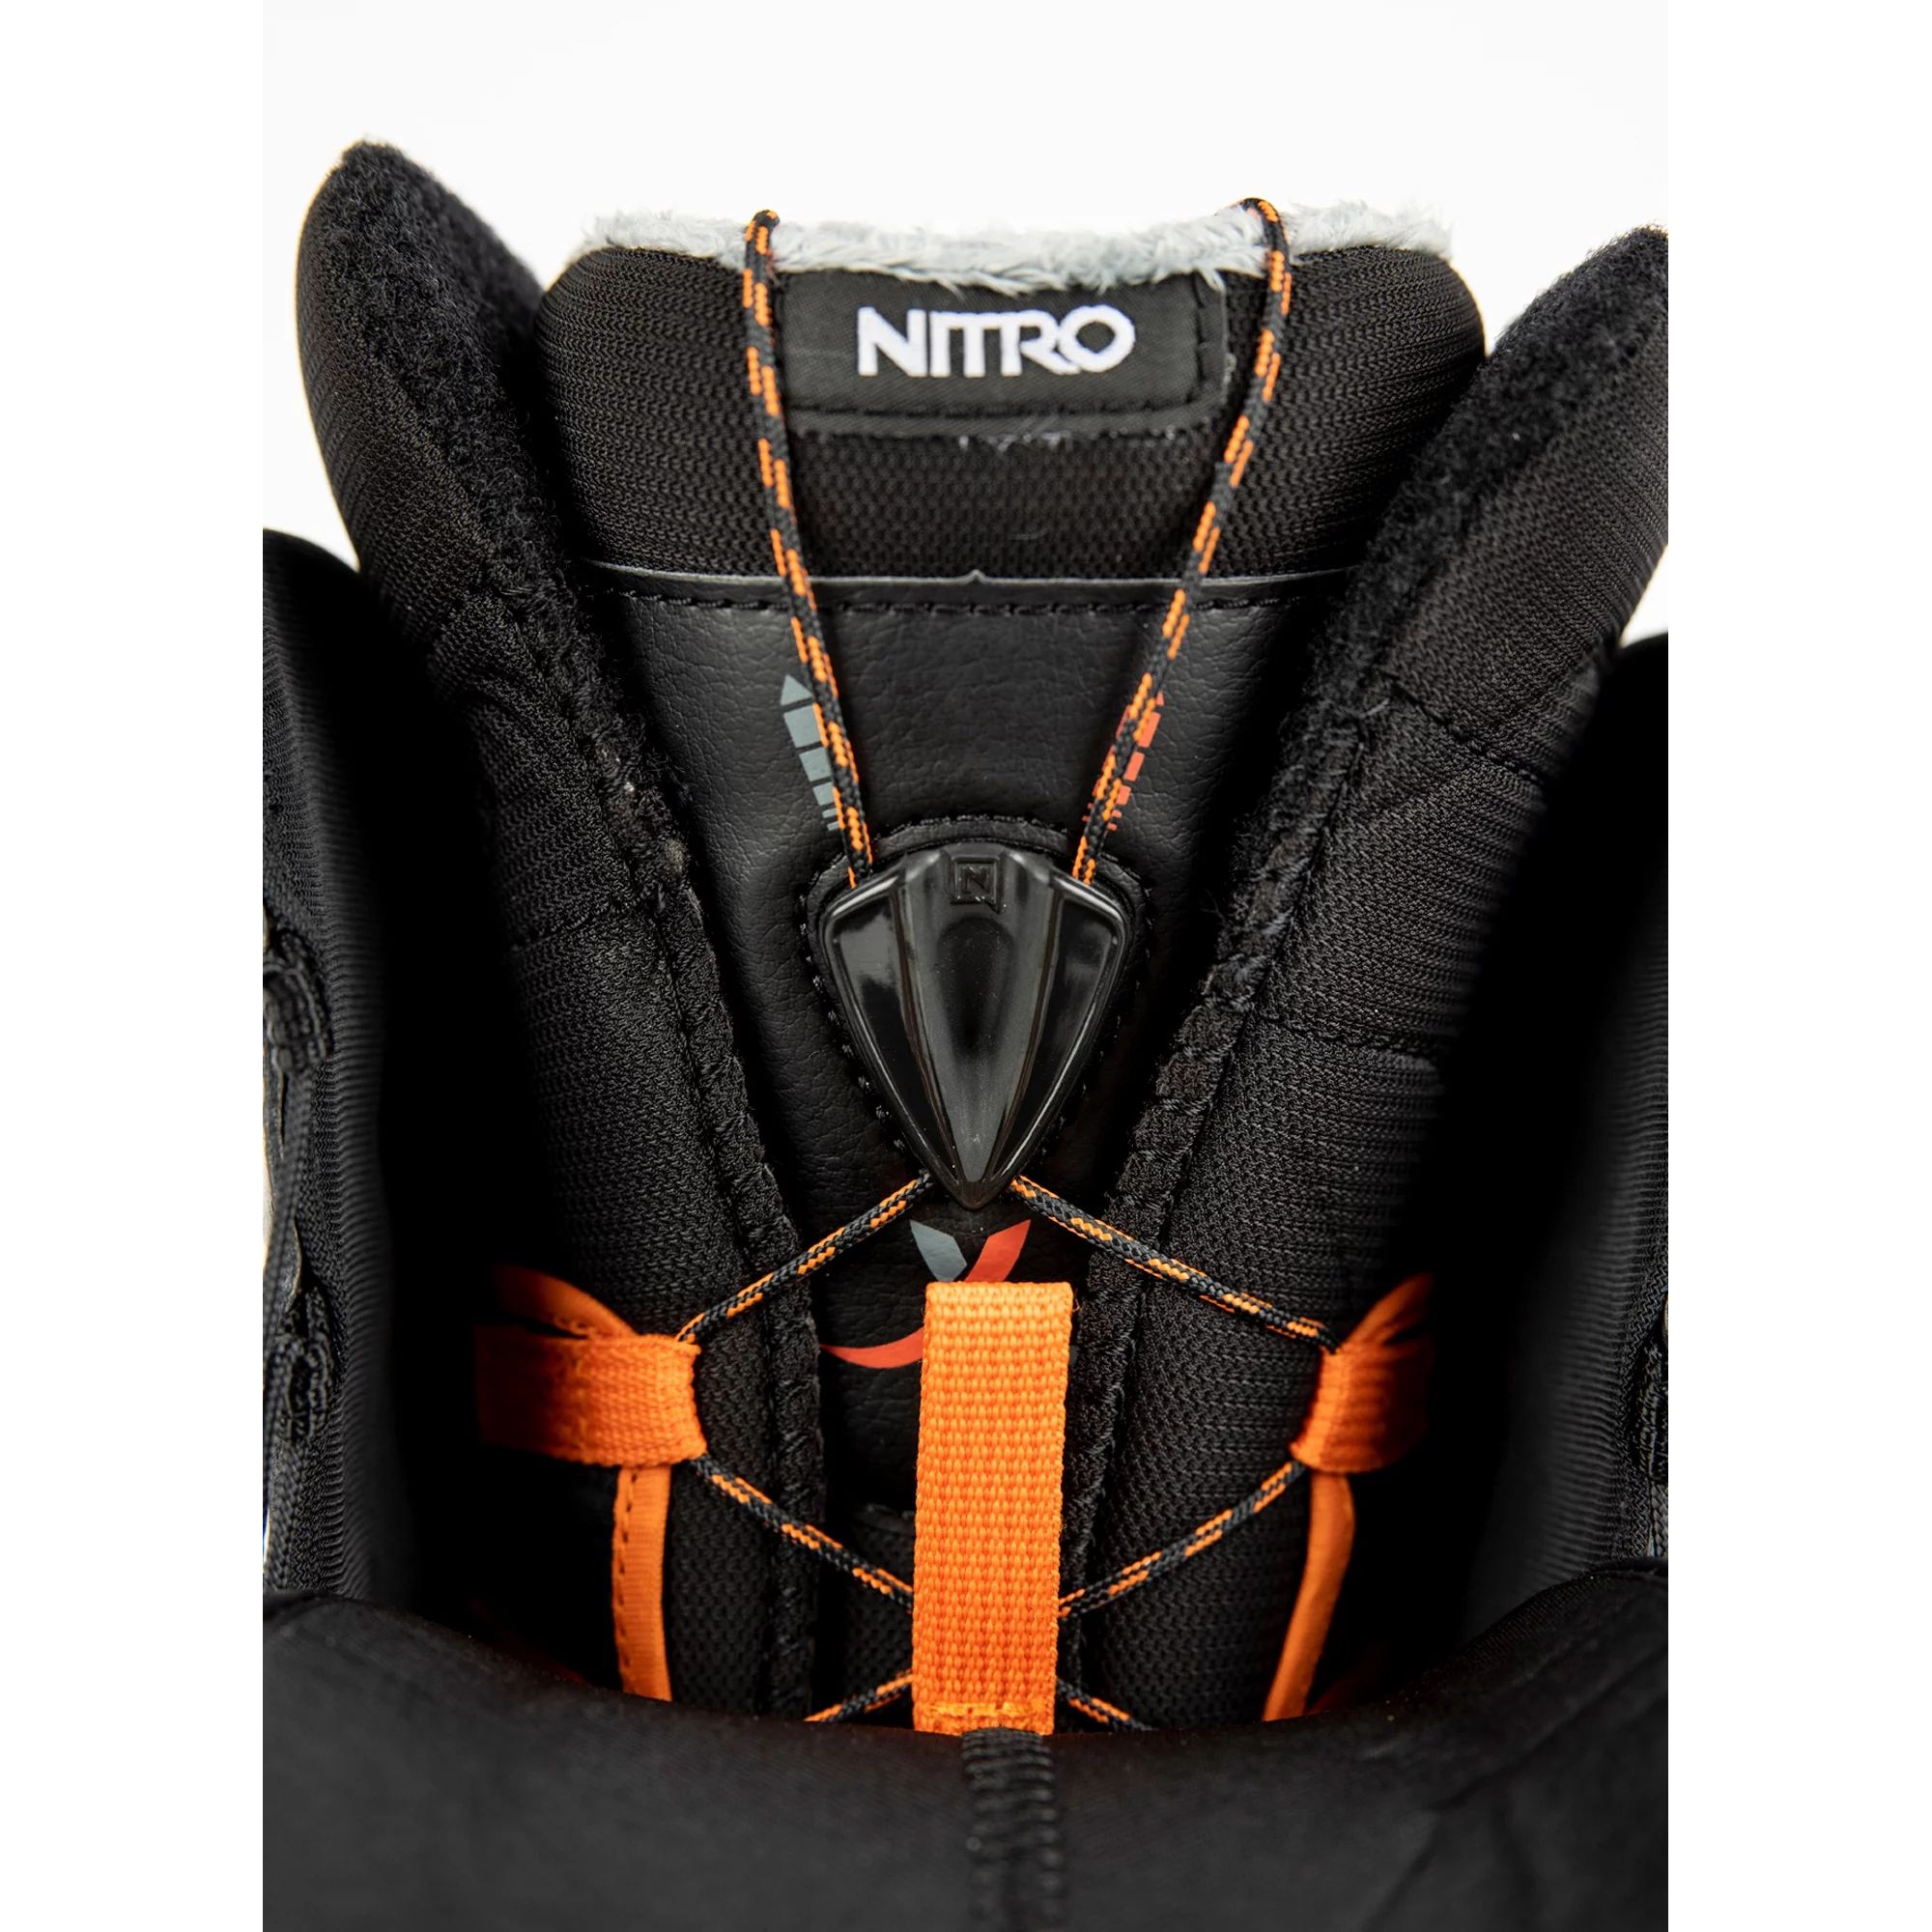 Boots Snowboard -  nitro CROWN TLS